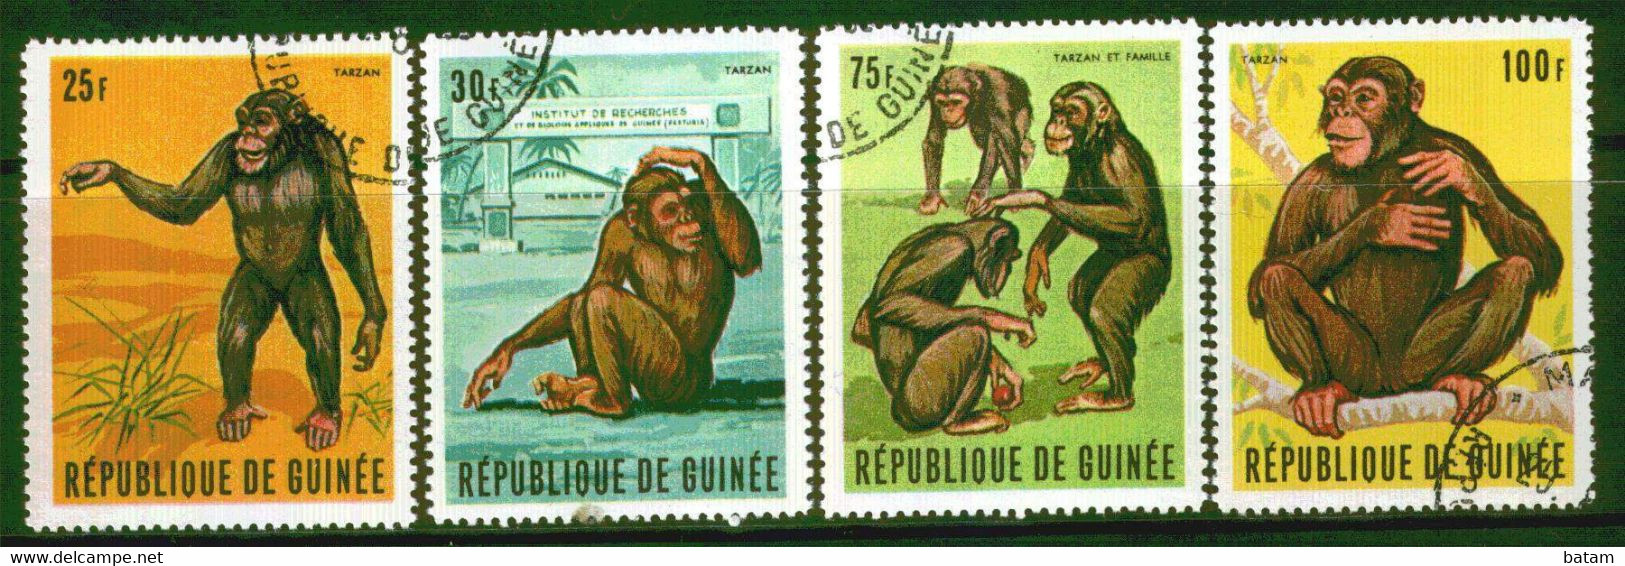 246 - Guinea - Monkeys - Used Set - Affen